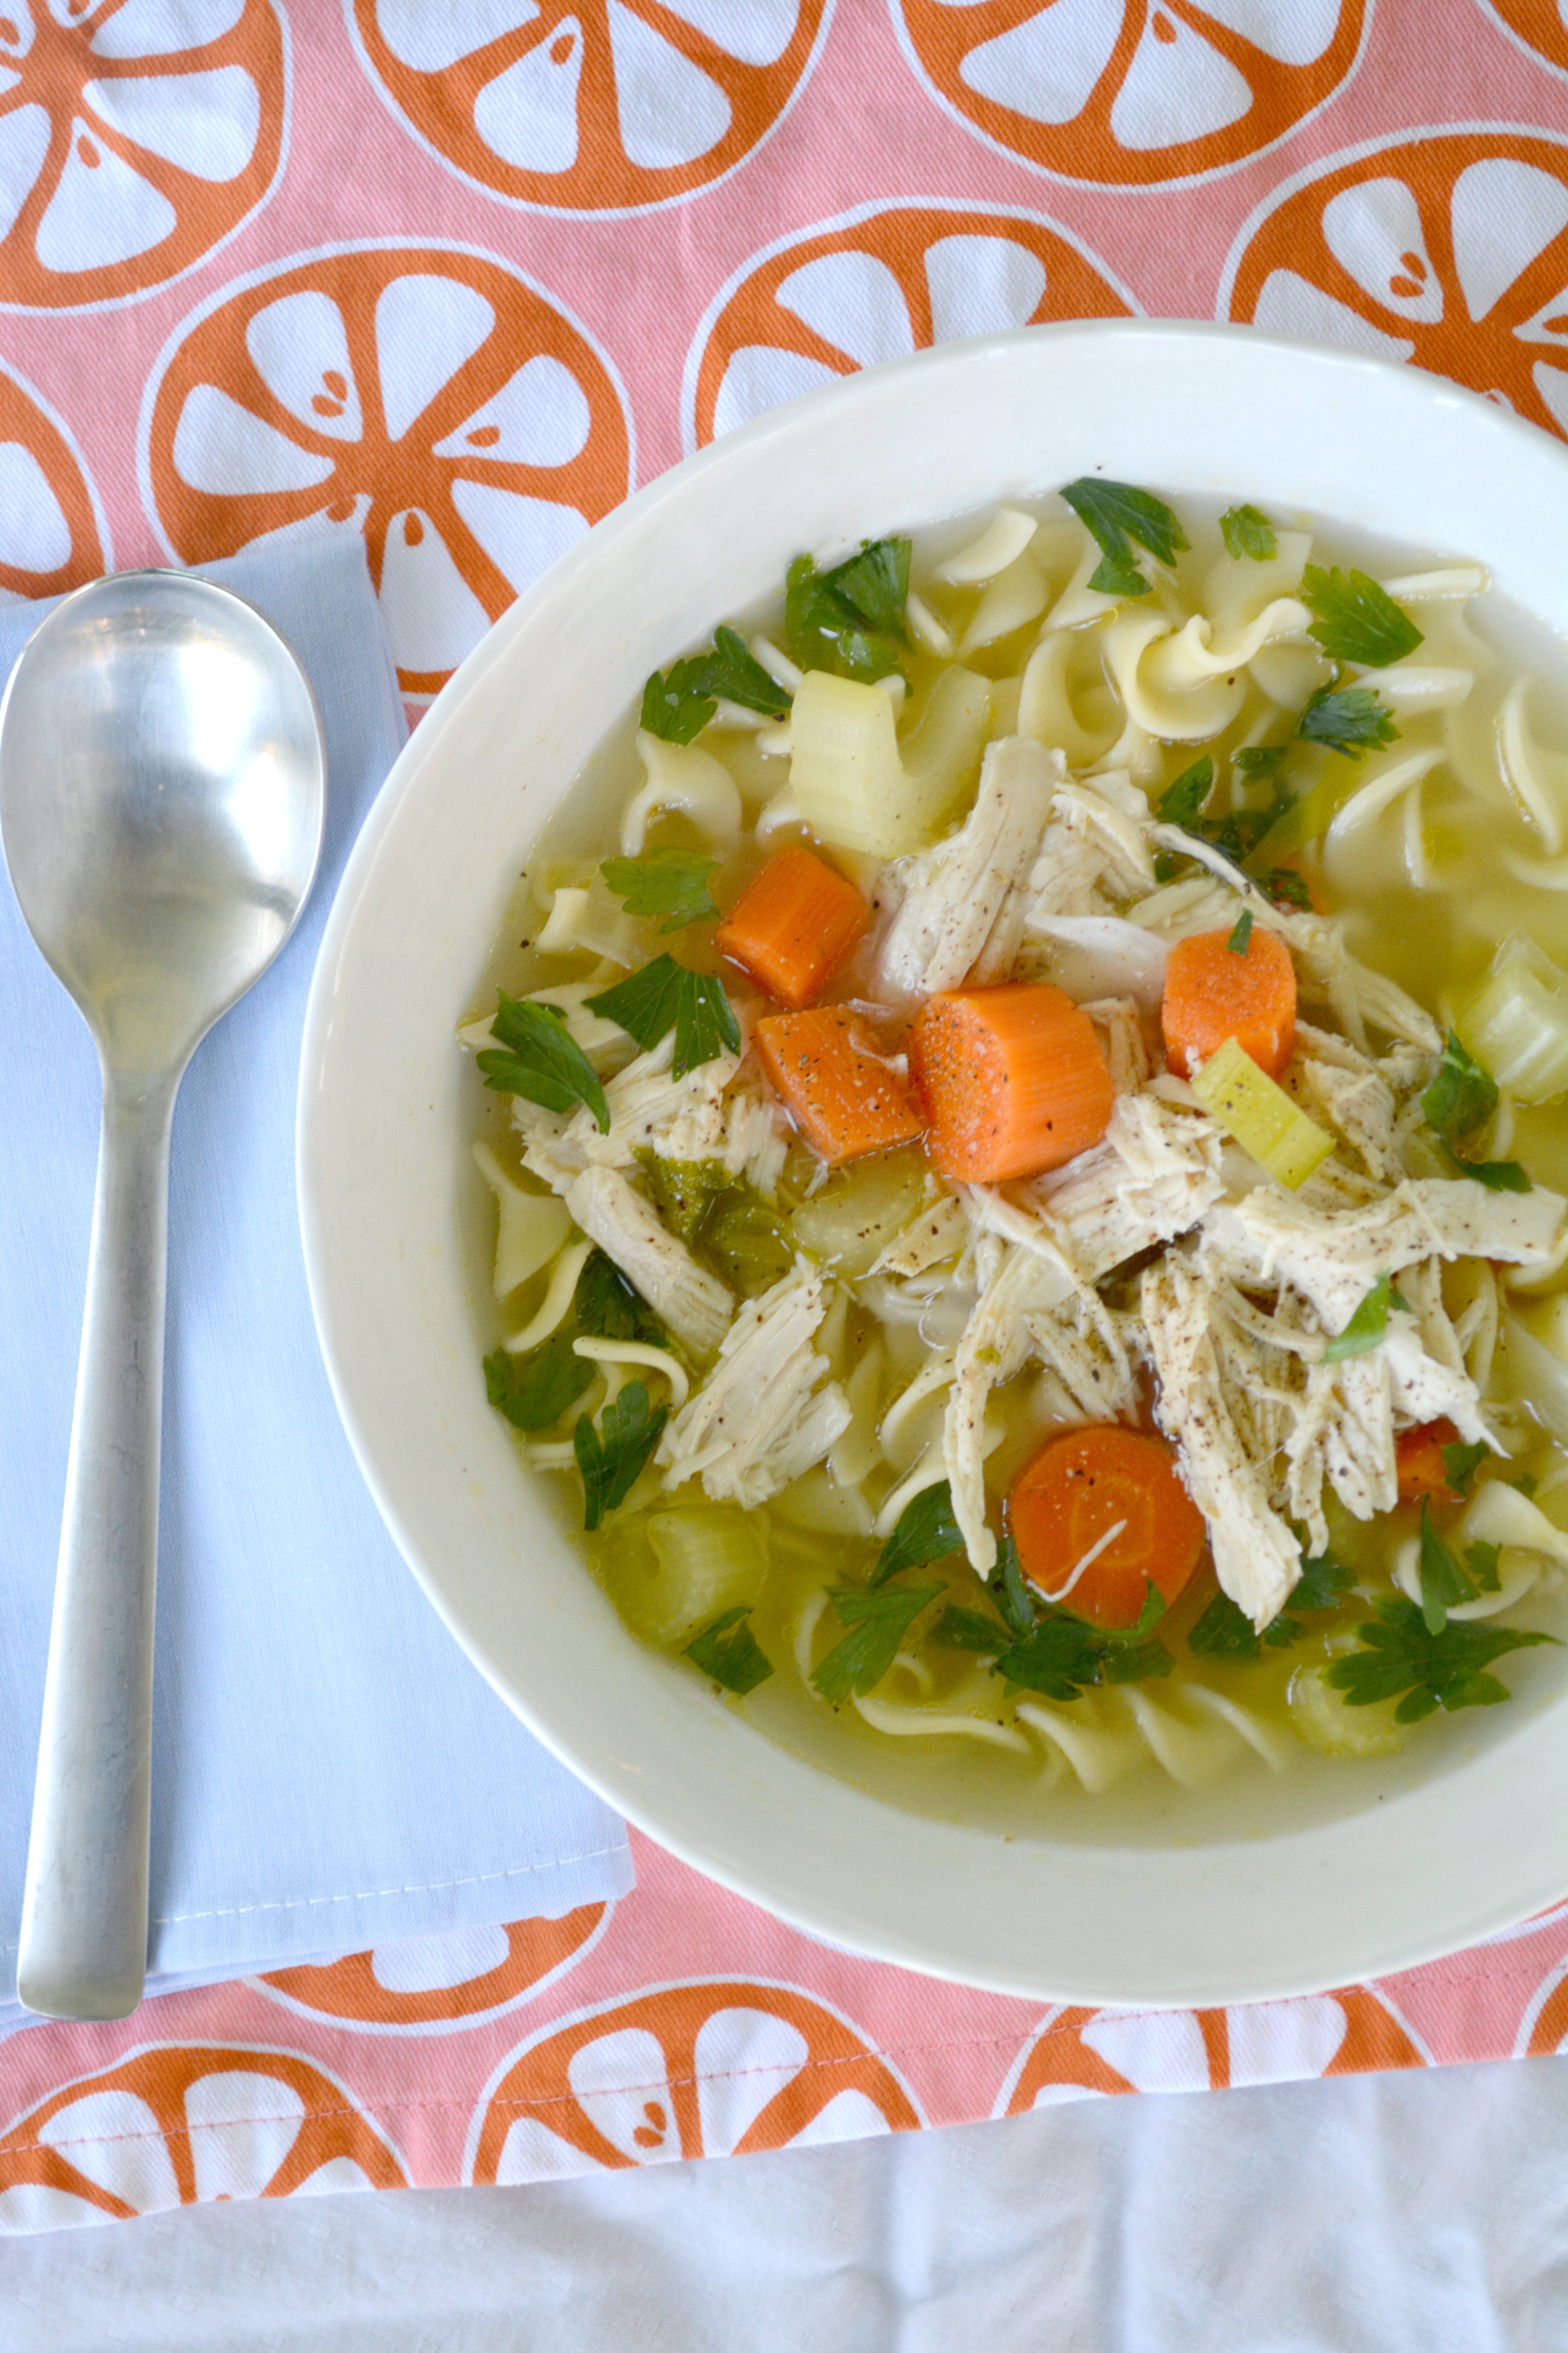 Disney Fork and Spoon Set - Noodle Soup